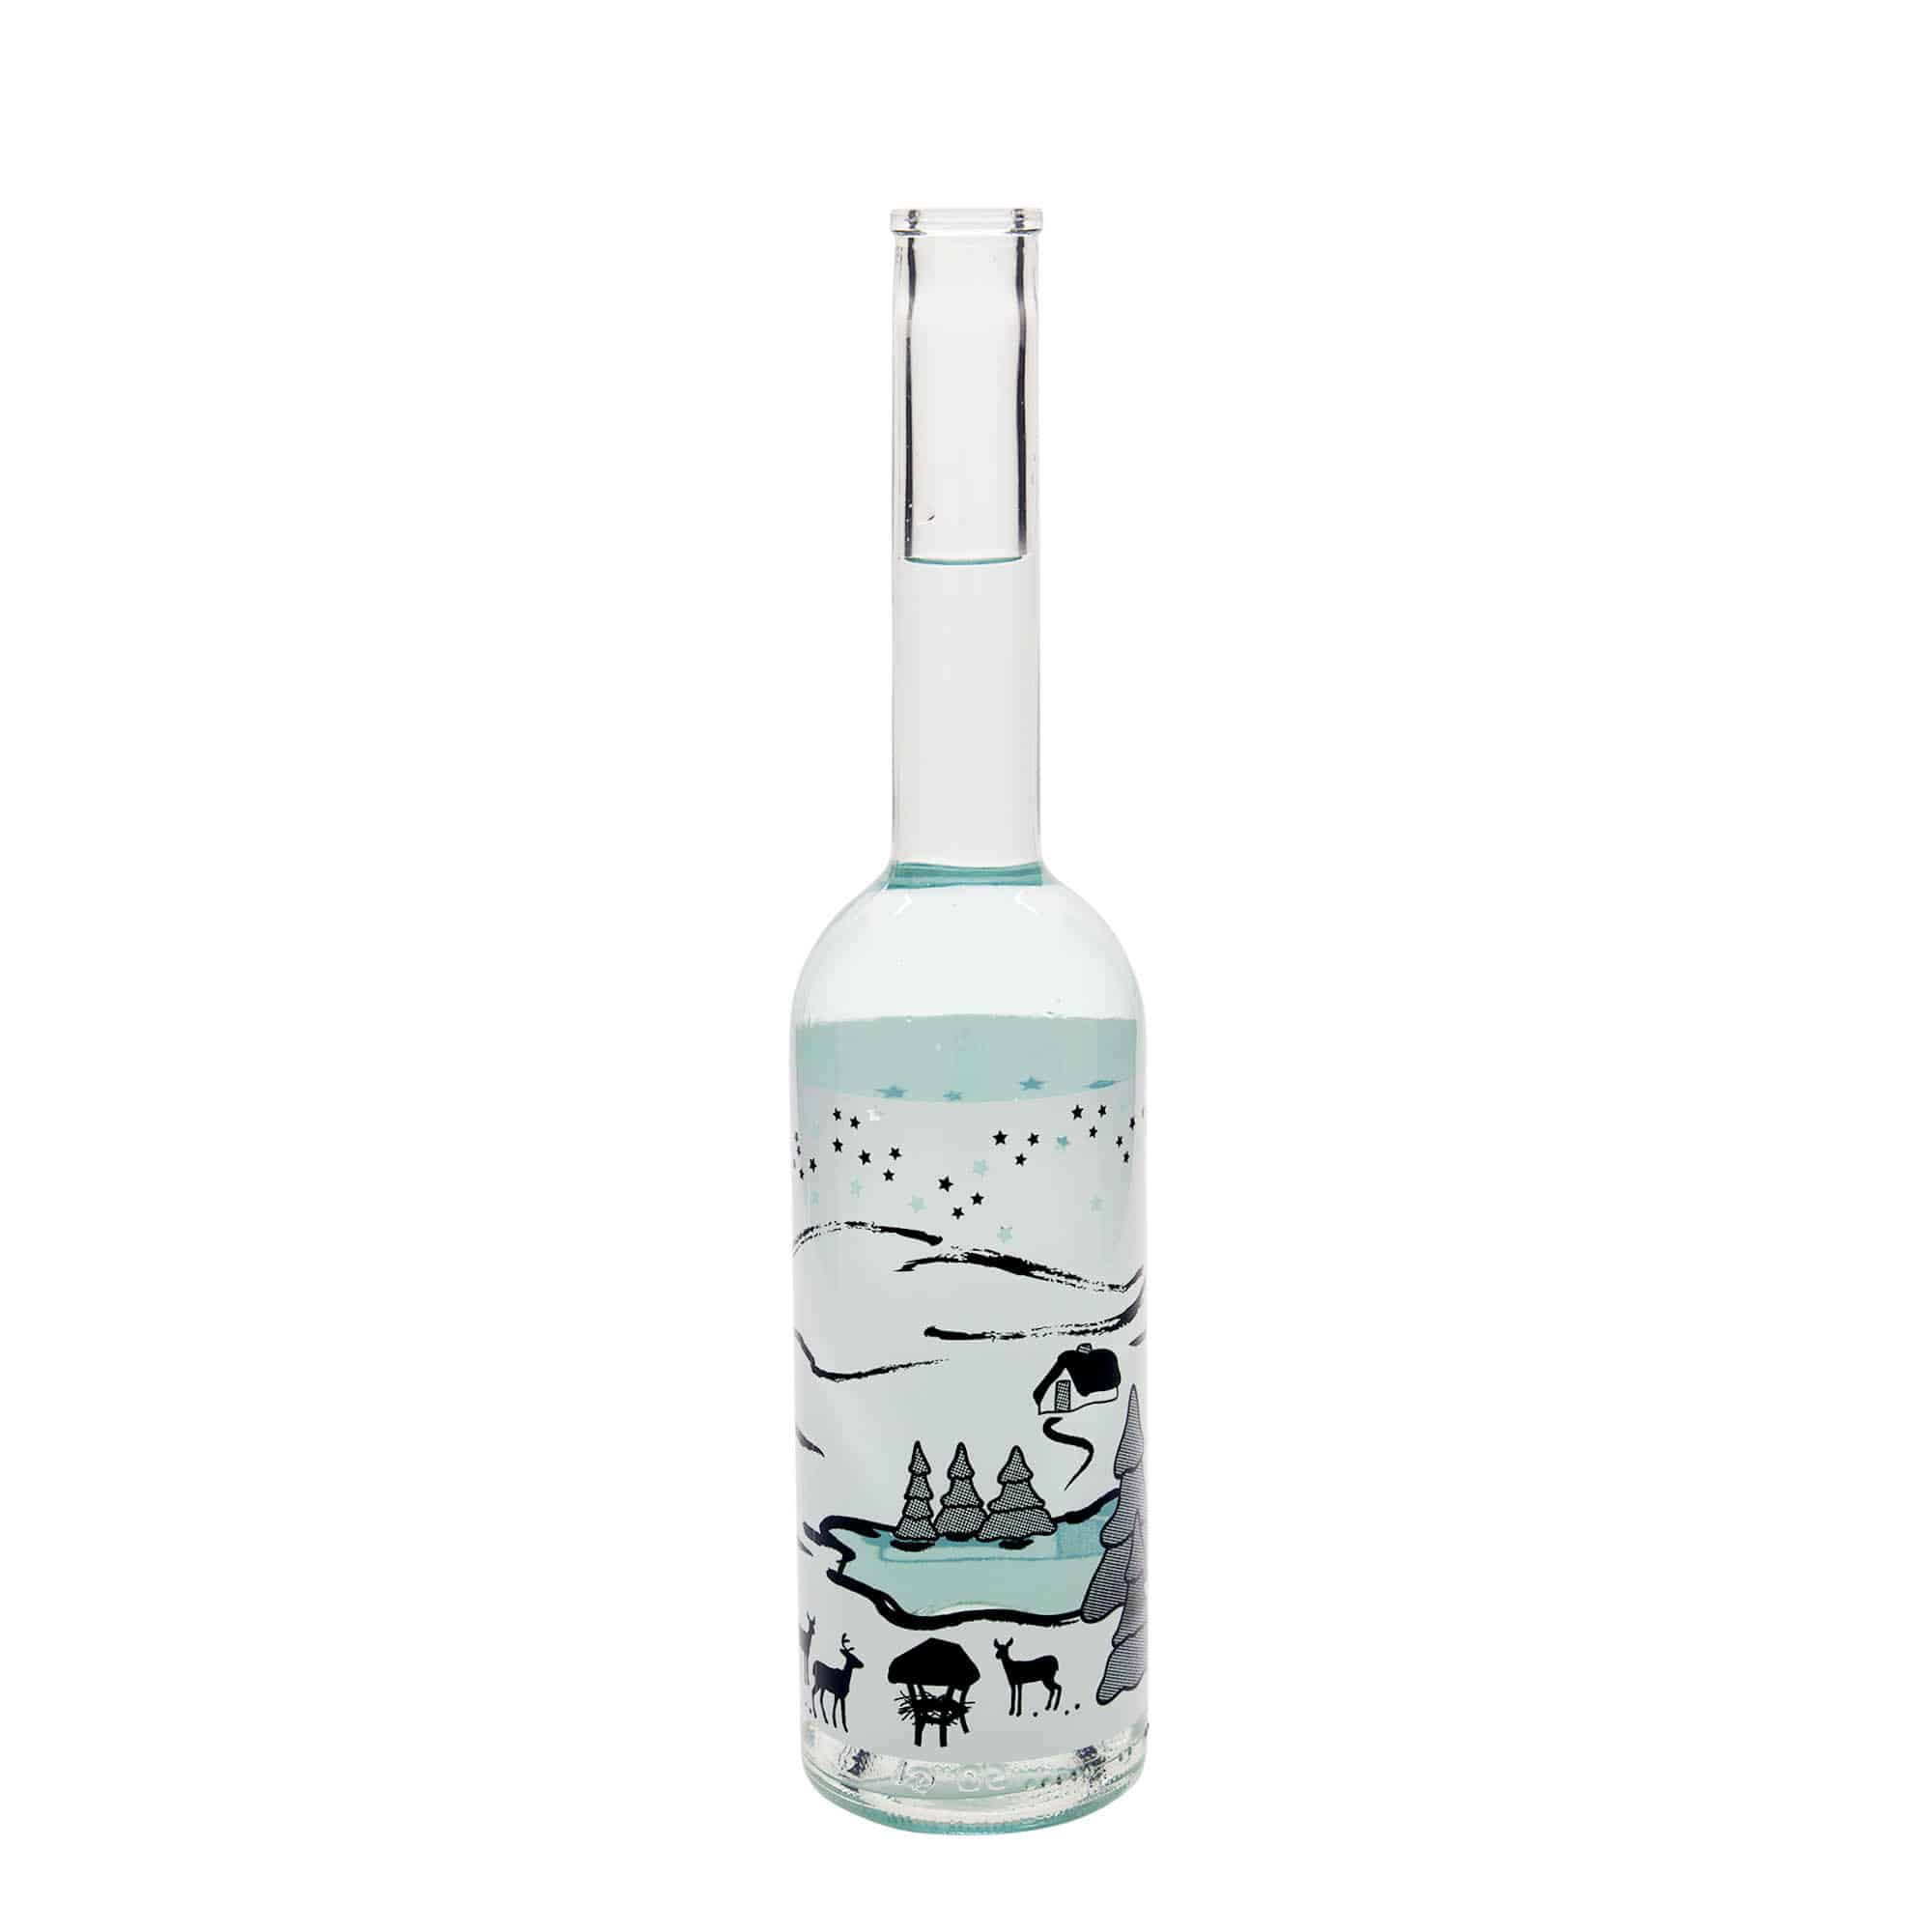 500 ml glass bottle 'Opera', print: Bianco winter dream, closure: cork